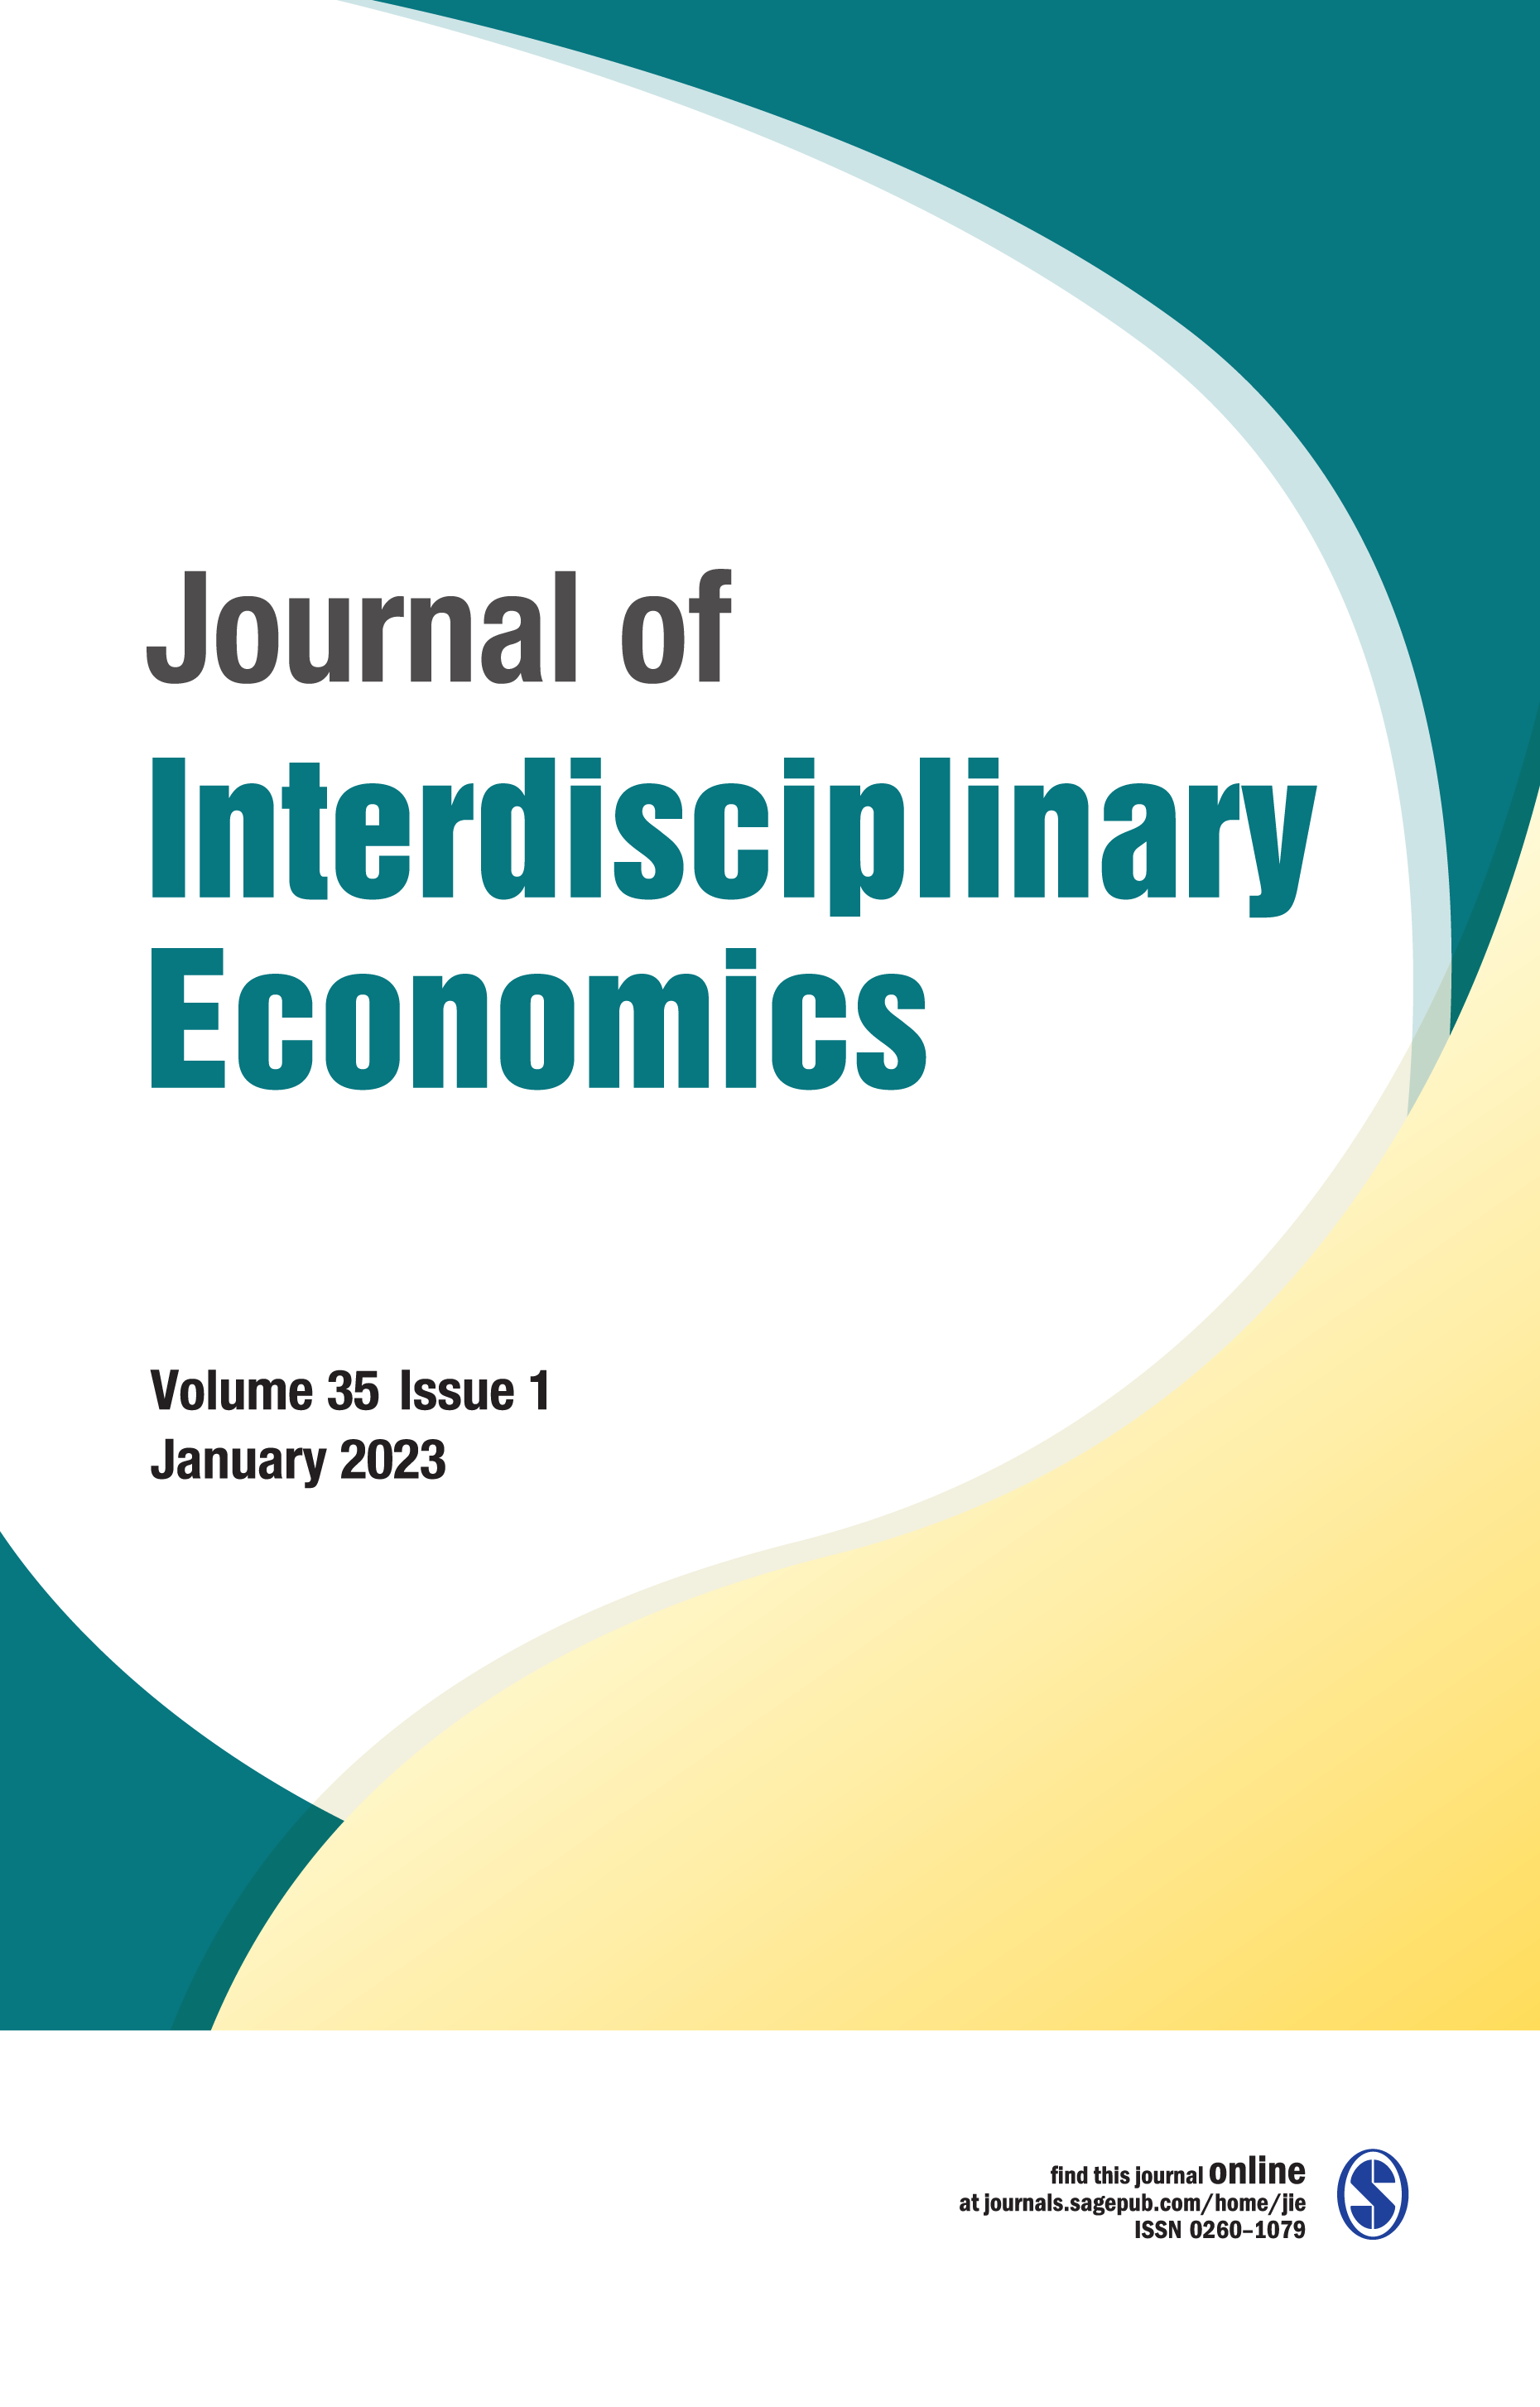 Journal of interdisciplinary economics.